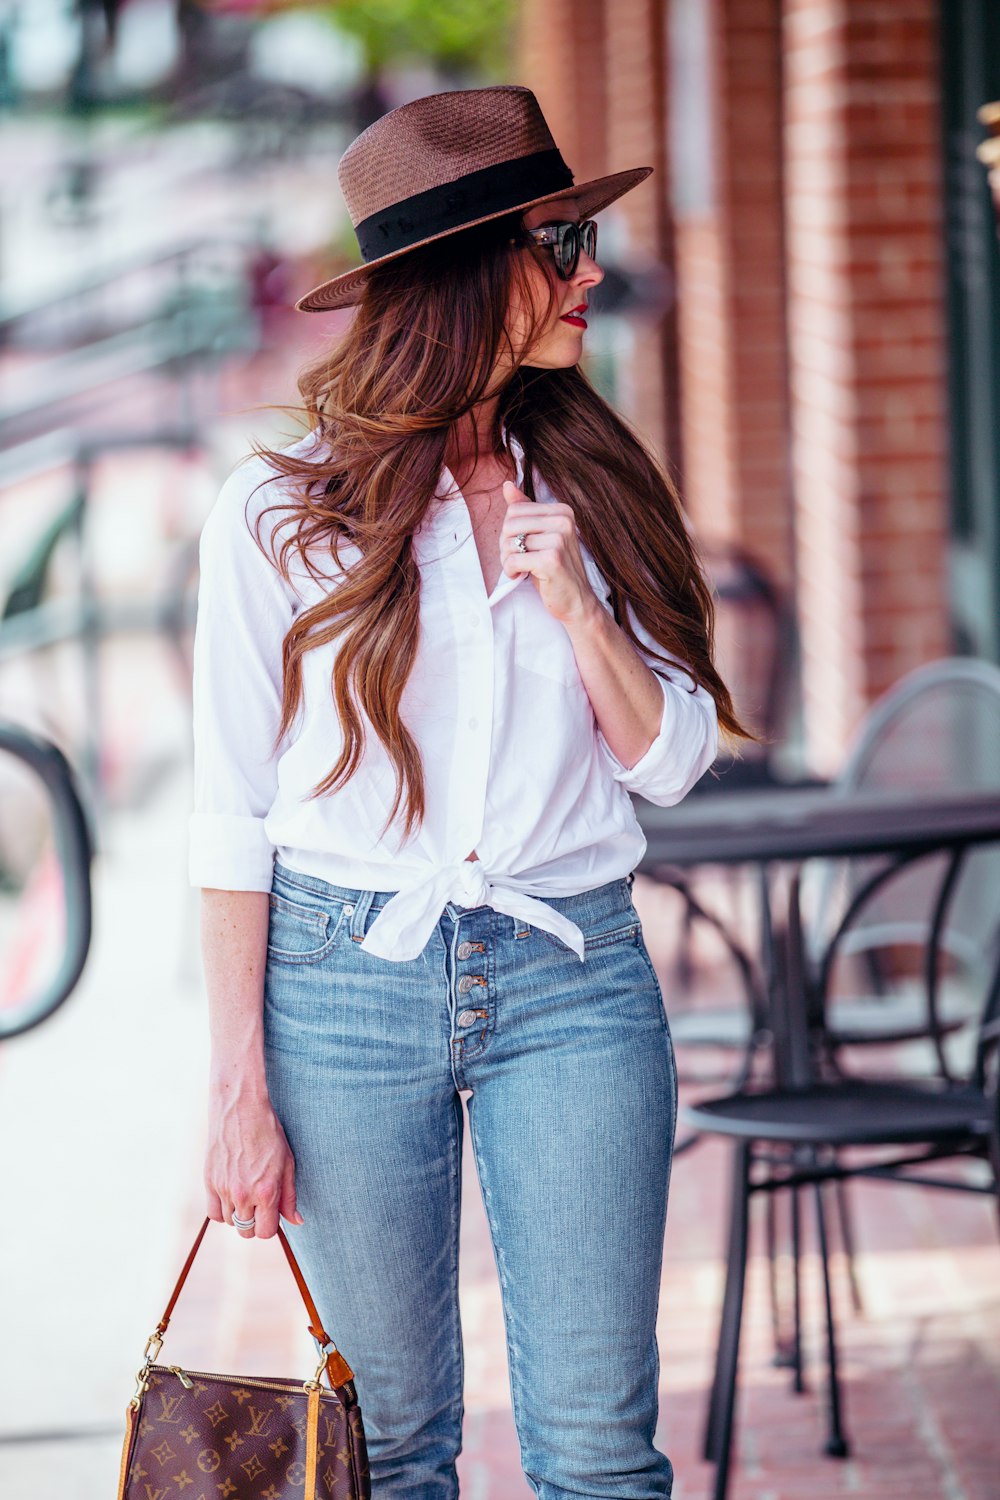 women's white dress shirt and blue jeans photo – Free Fashion Image on  Unsplash